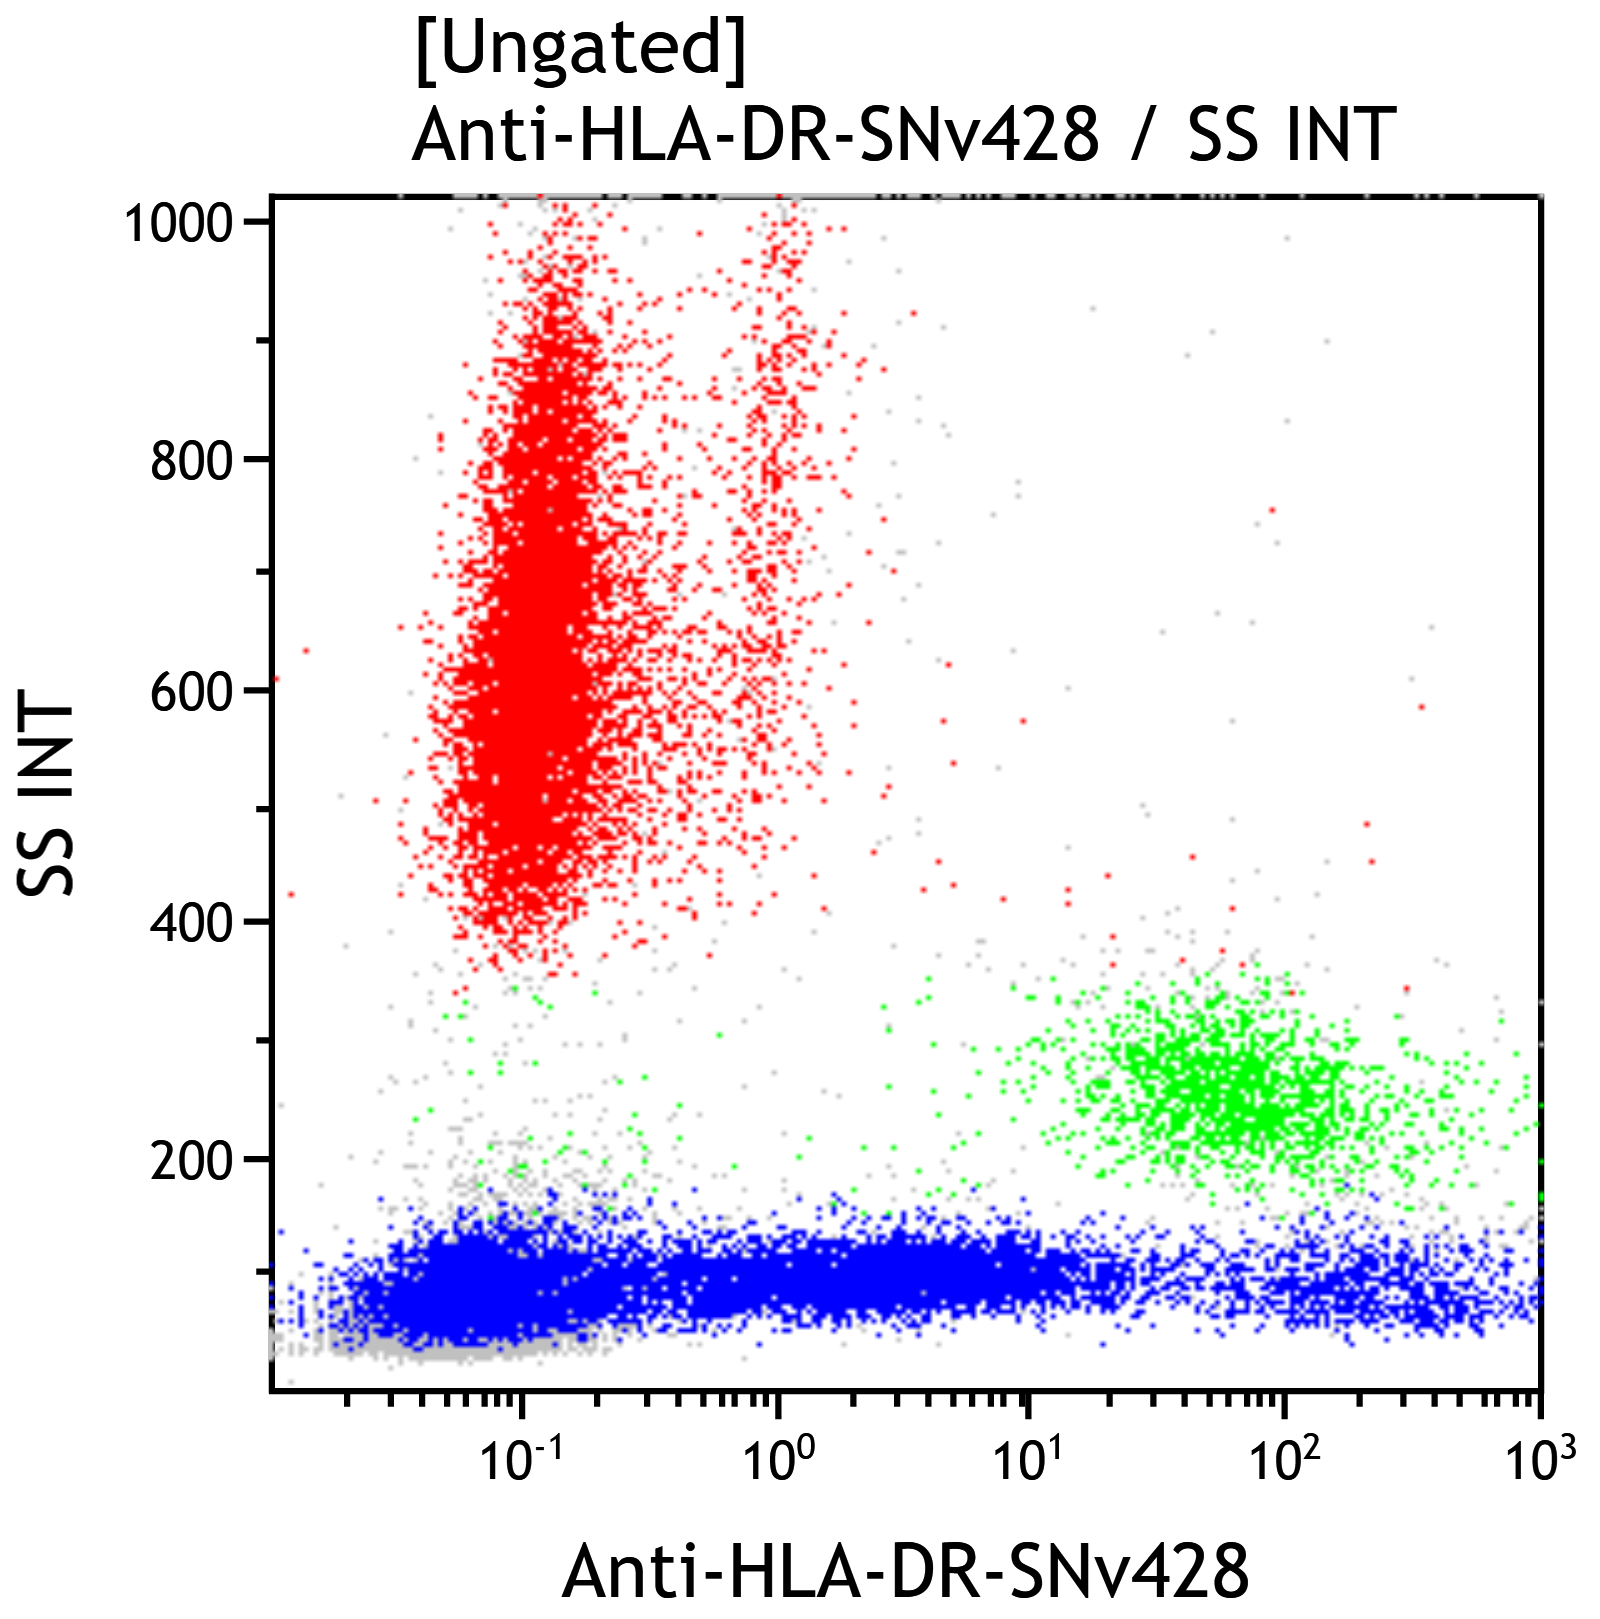 Anti-HLA-DR-SNv428 C76822 dot-plot